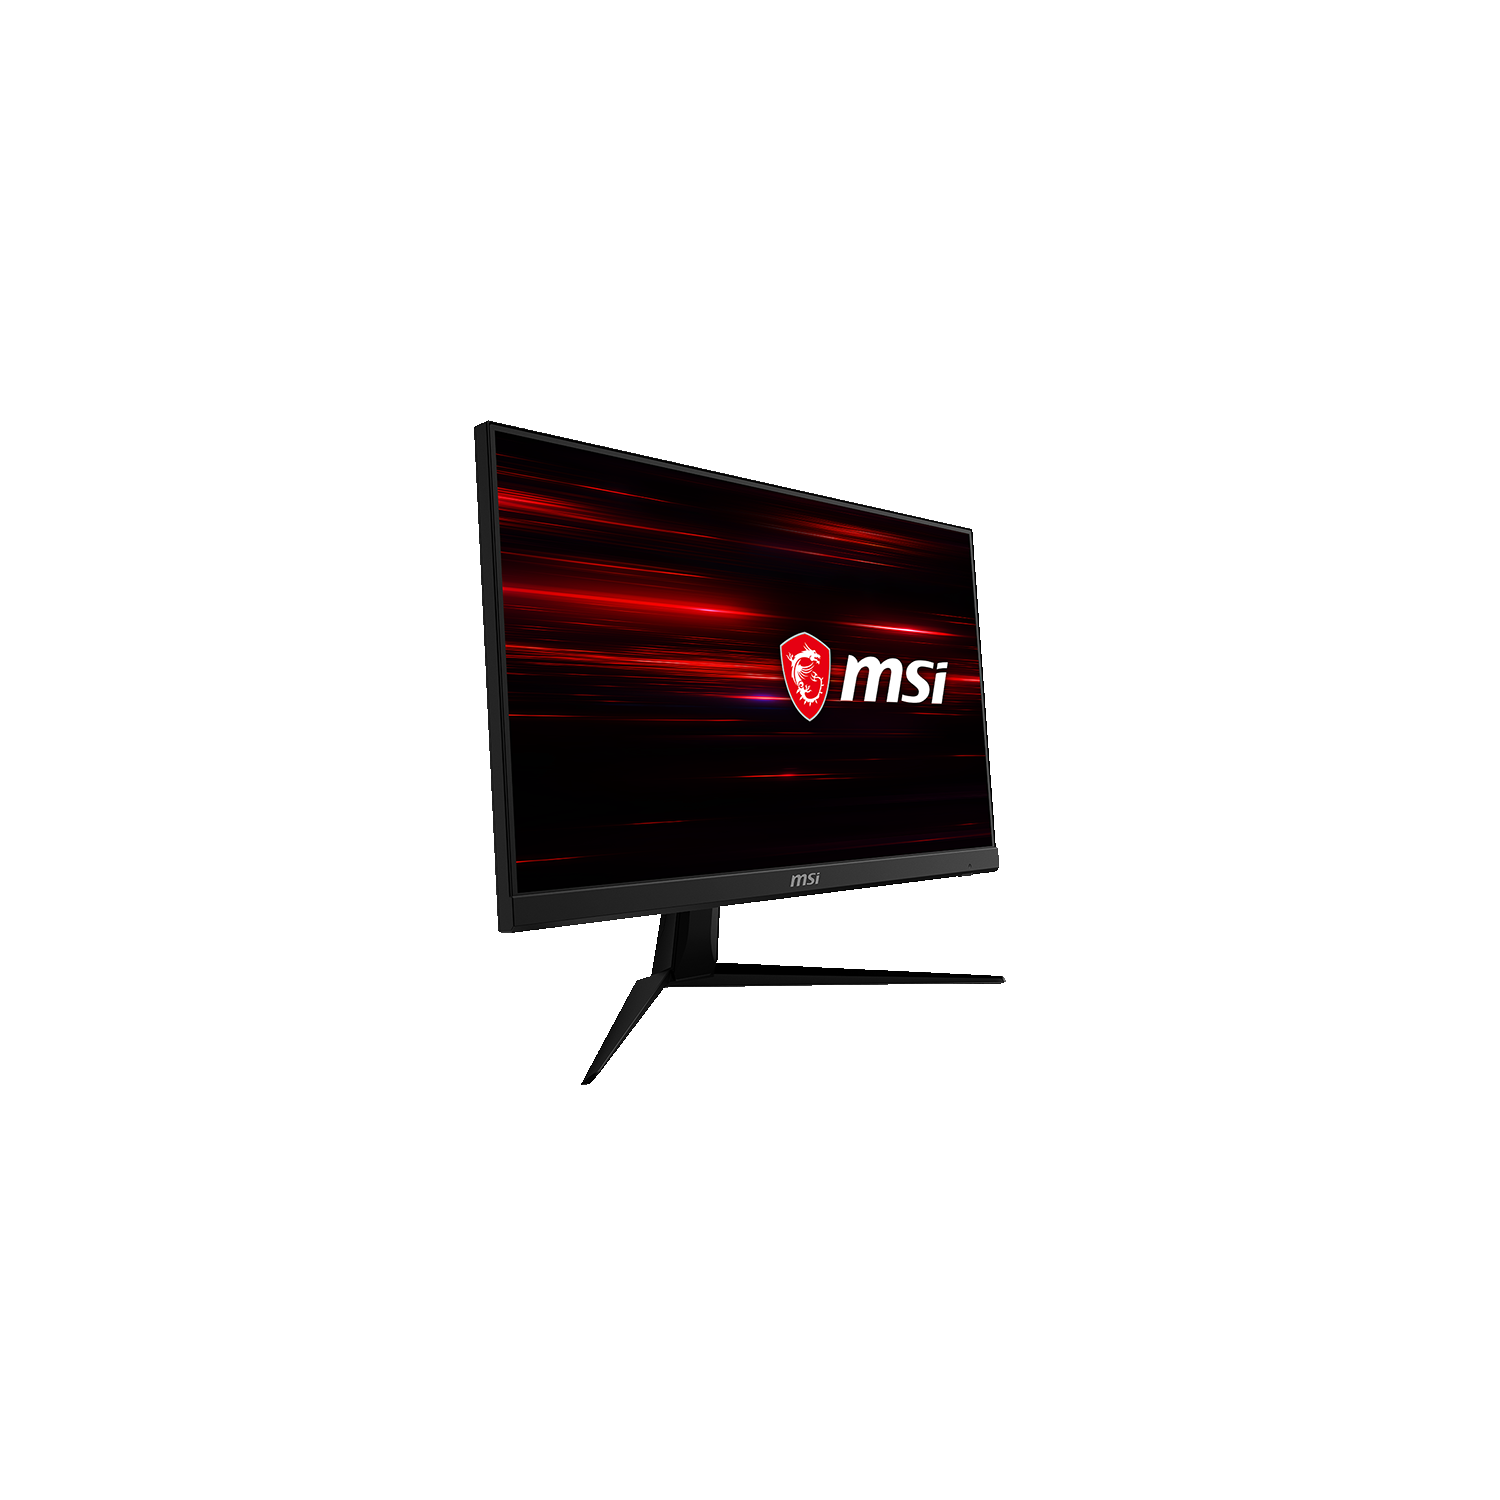 Msi Optix G241 24 Fhd 19 X 1080 1ms Mprt 144hz 2 X Hdmi Displayport Amd Freesync Frameless Design Ips Gaming Monitor Best Buy Canada